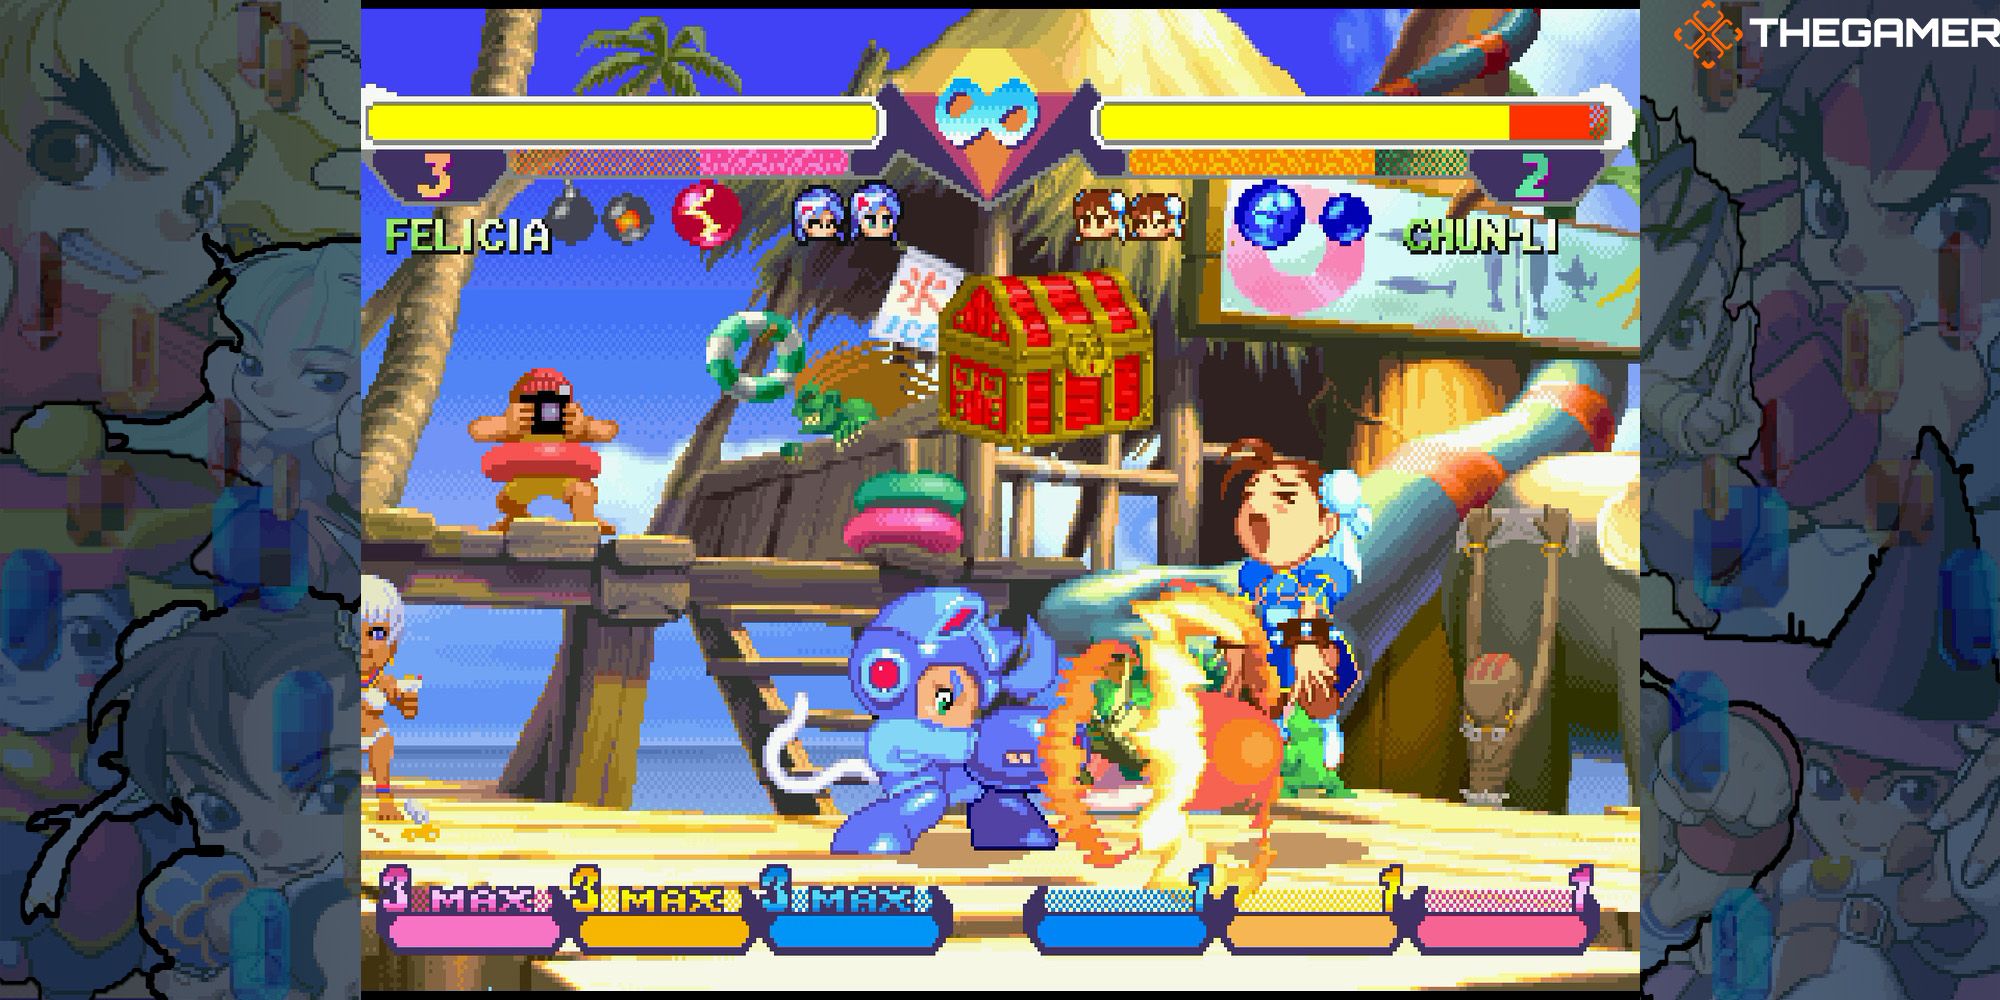 Felicia shoots Chun-li with Mega Man's Mega Buster in a battle at the Beach House. Pocket Fighter.